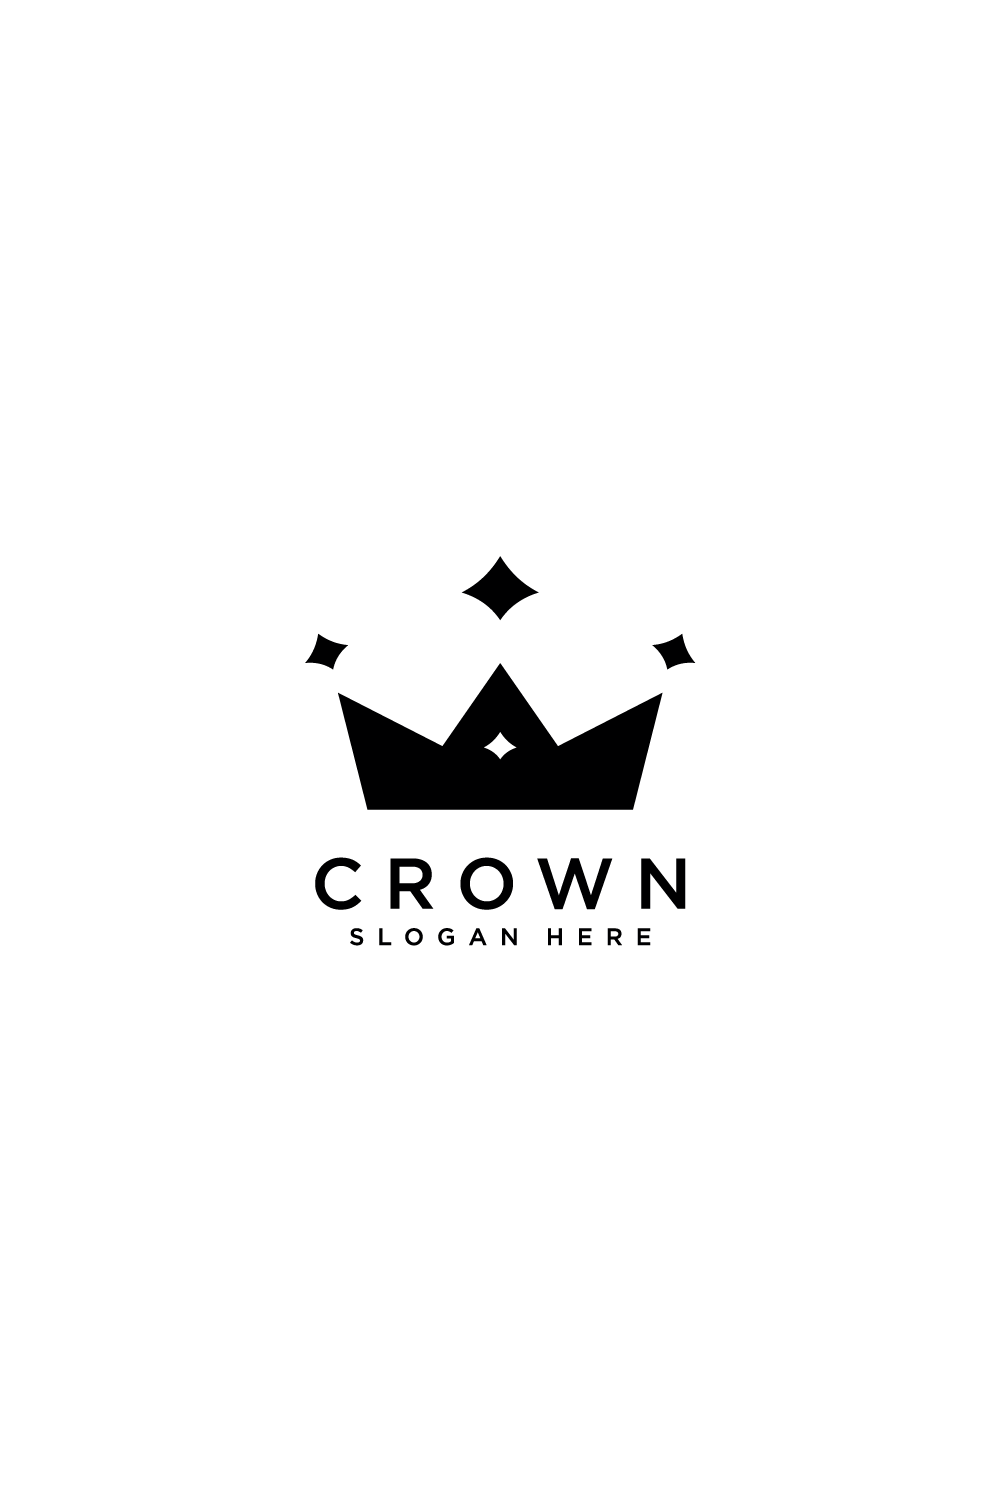 crown logo design pinterest preview image.